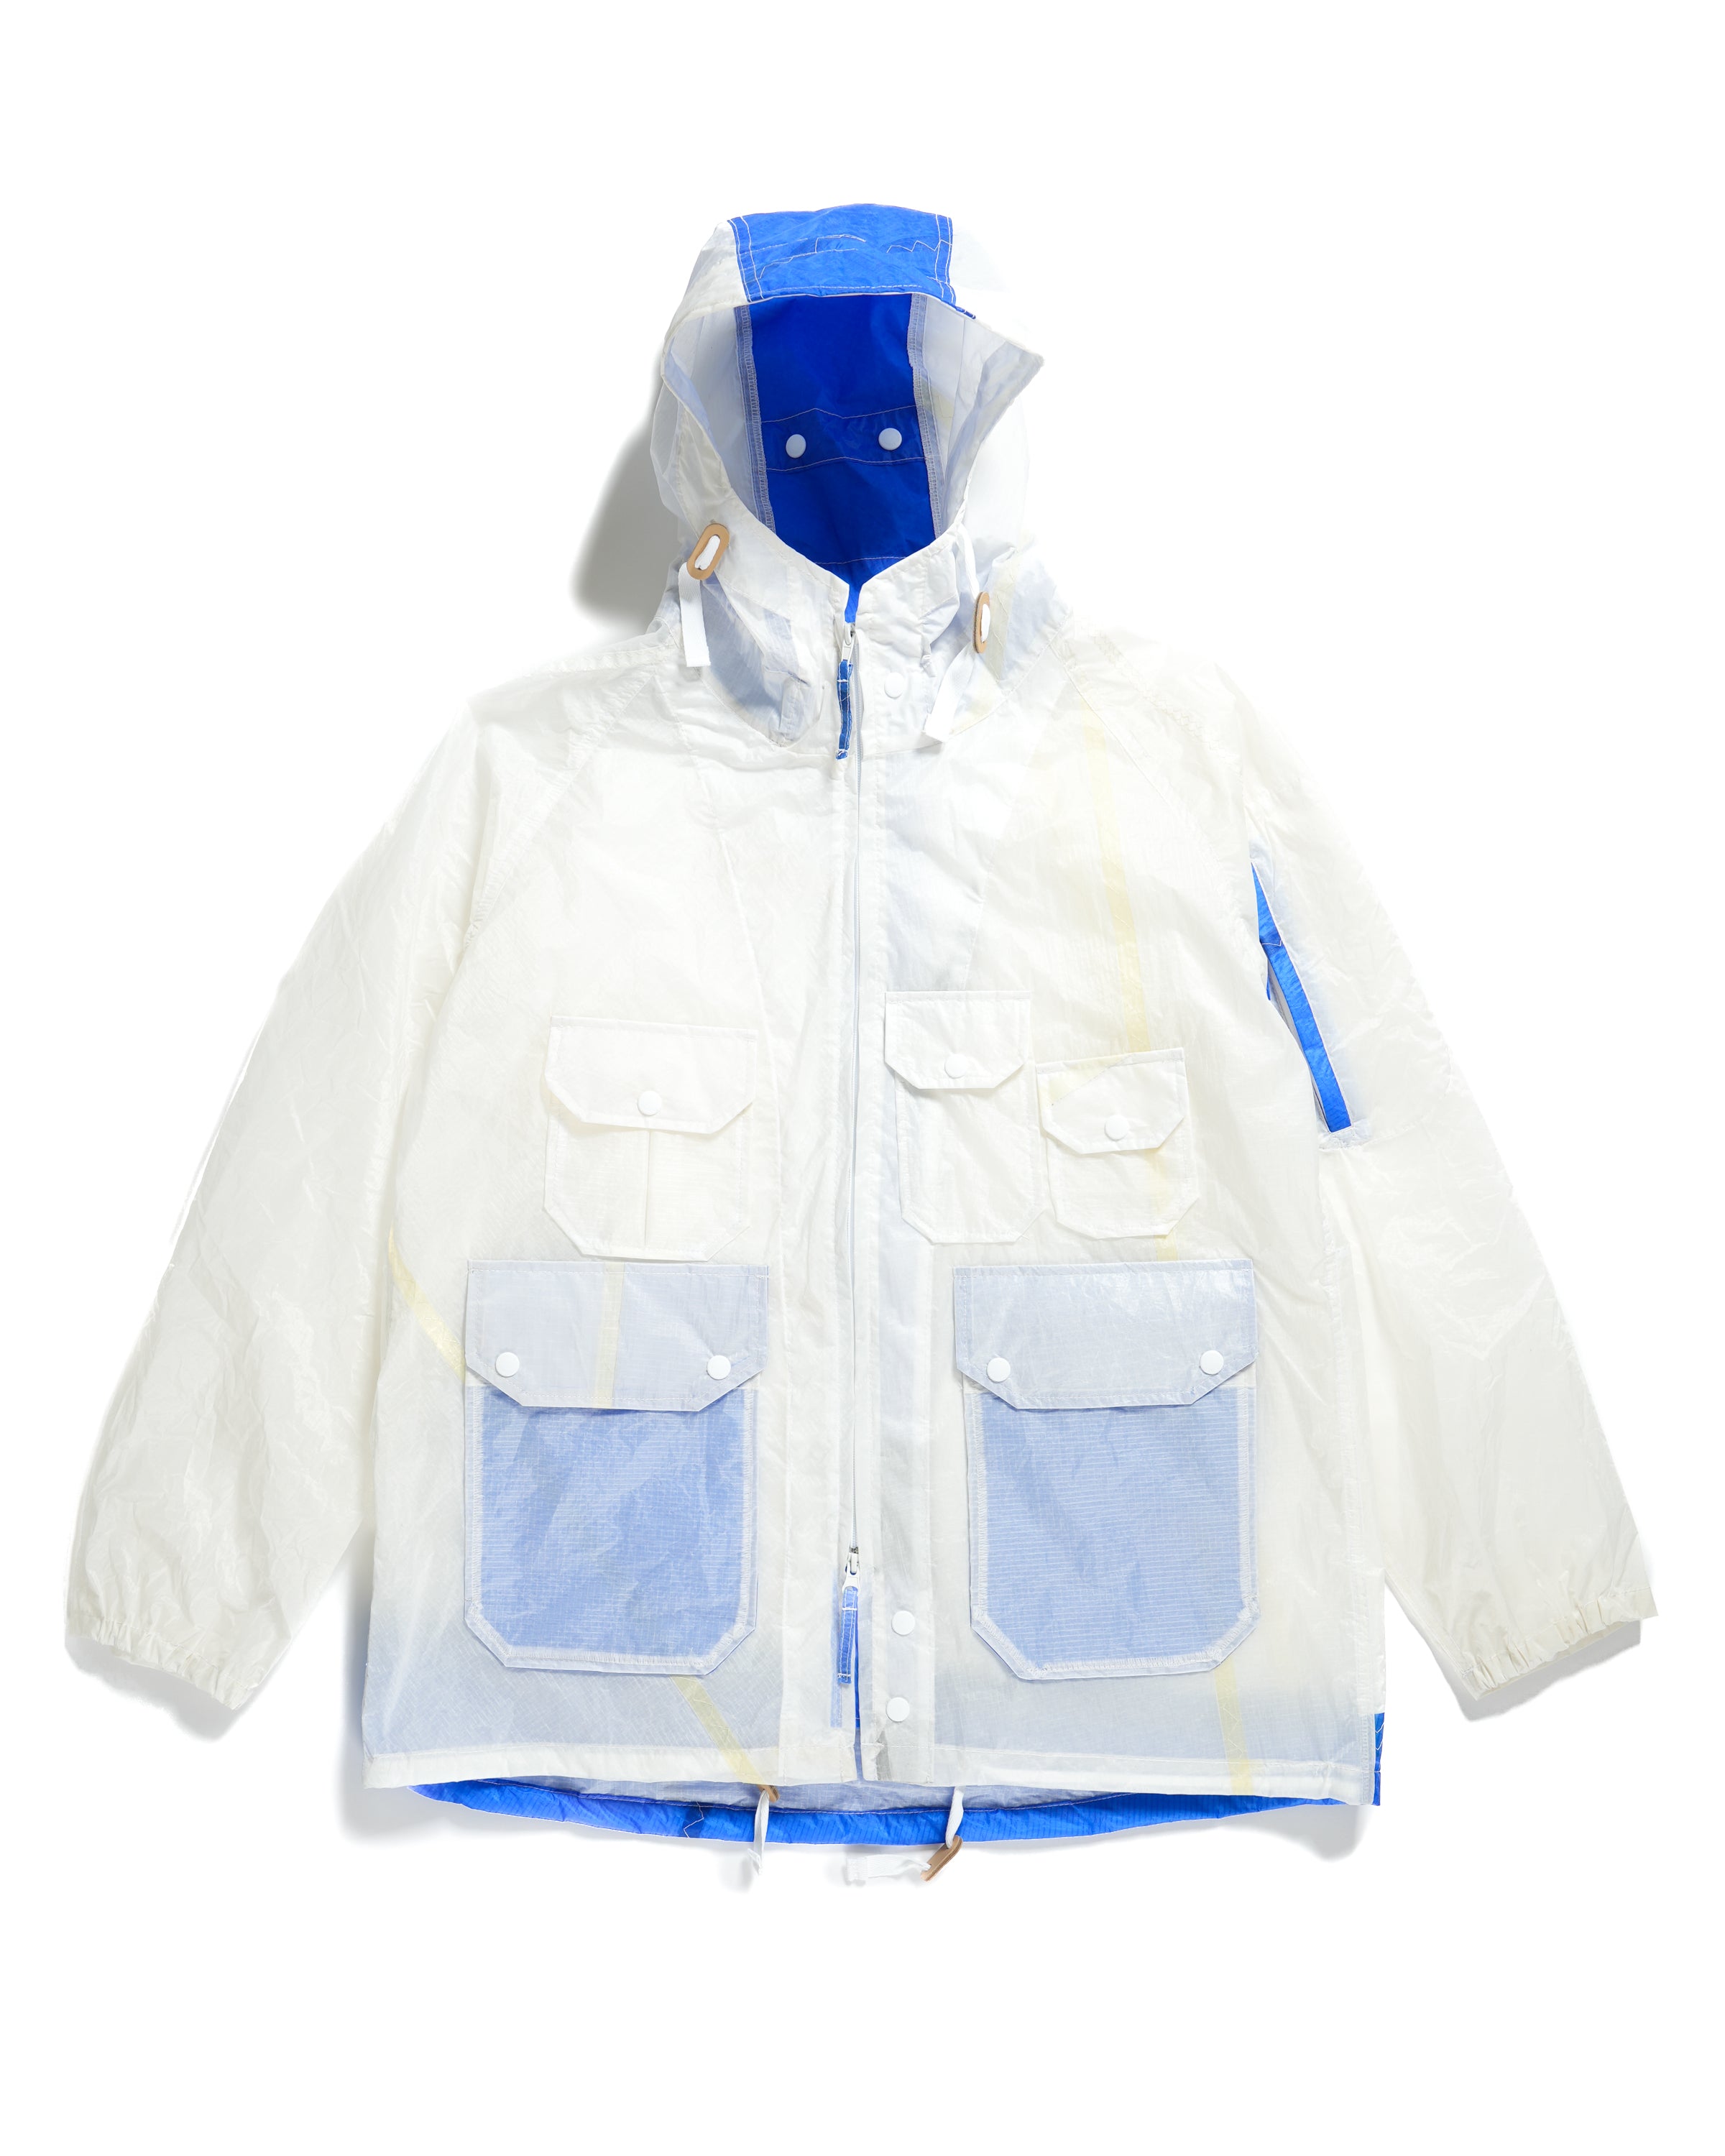 Engineered Garments x Mafia Bags Atlantic Parka - Assorted - Upcycle Sail Cloth